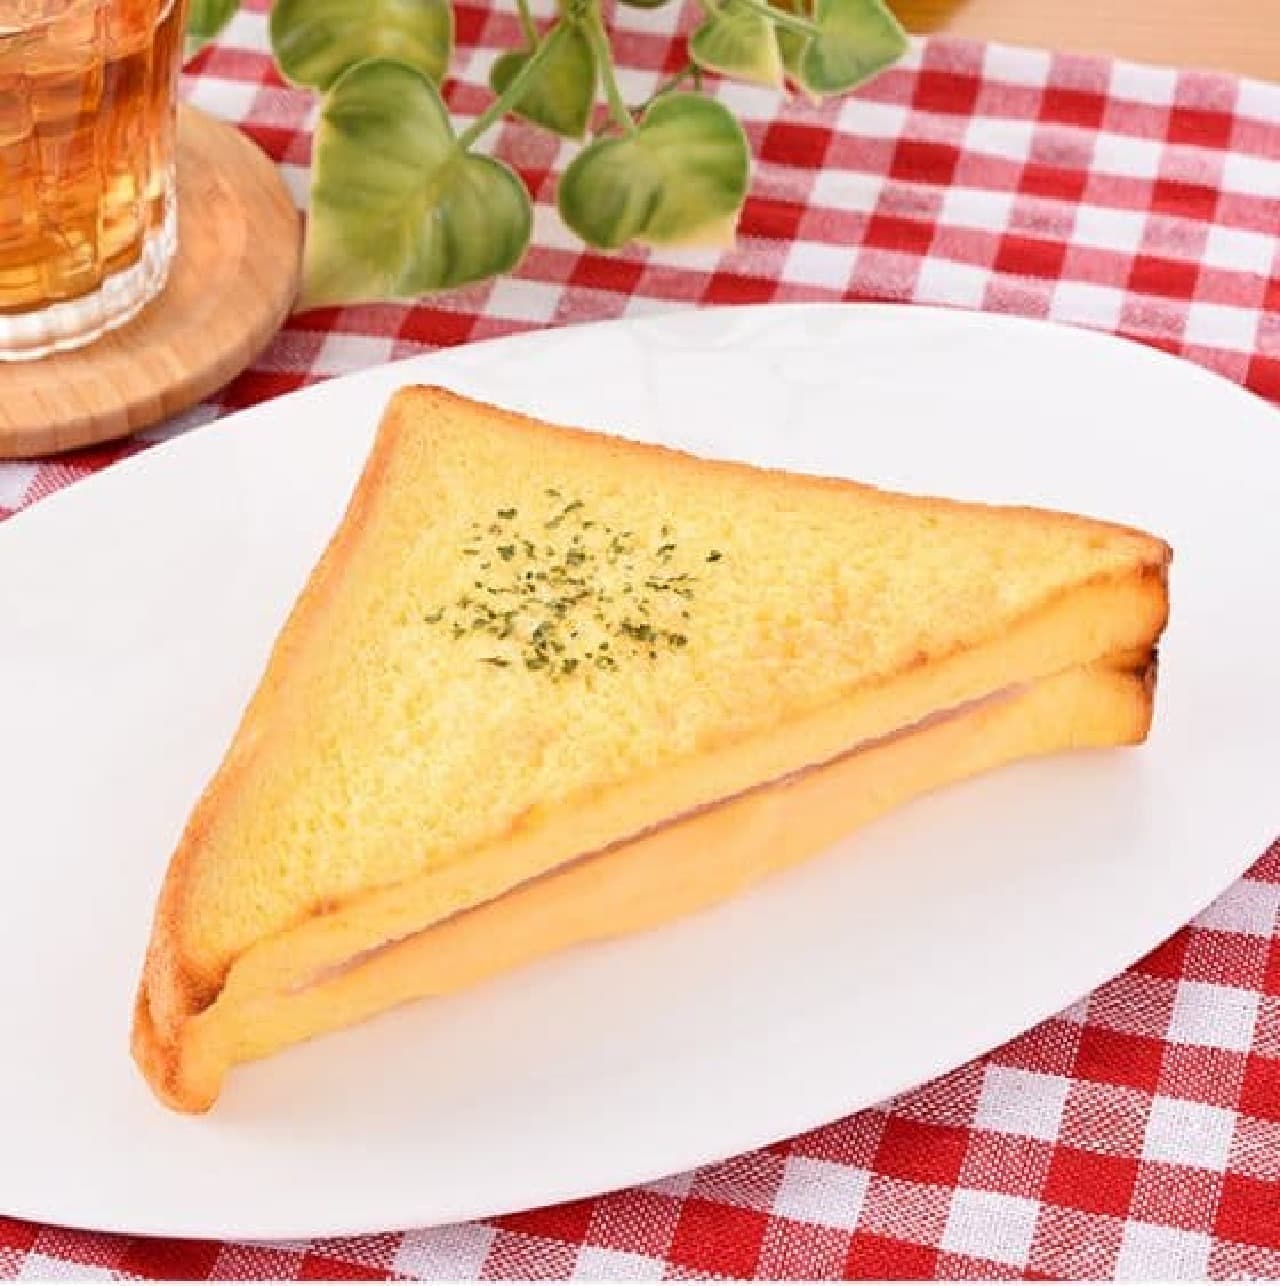 FamilyMart "French toast sandwich (ham & cheese)"